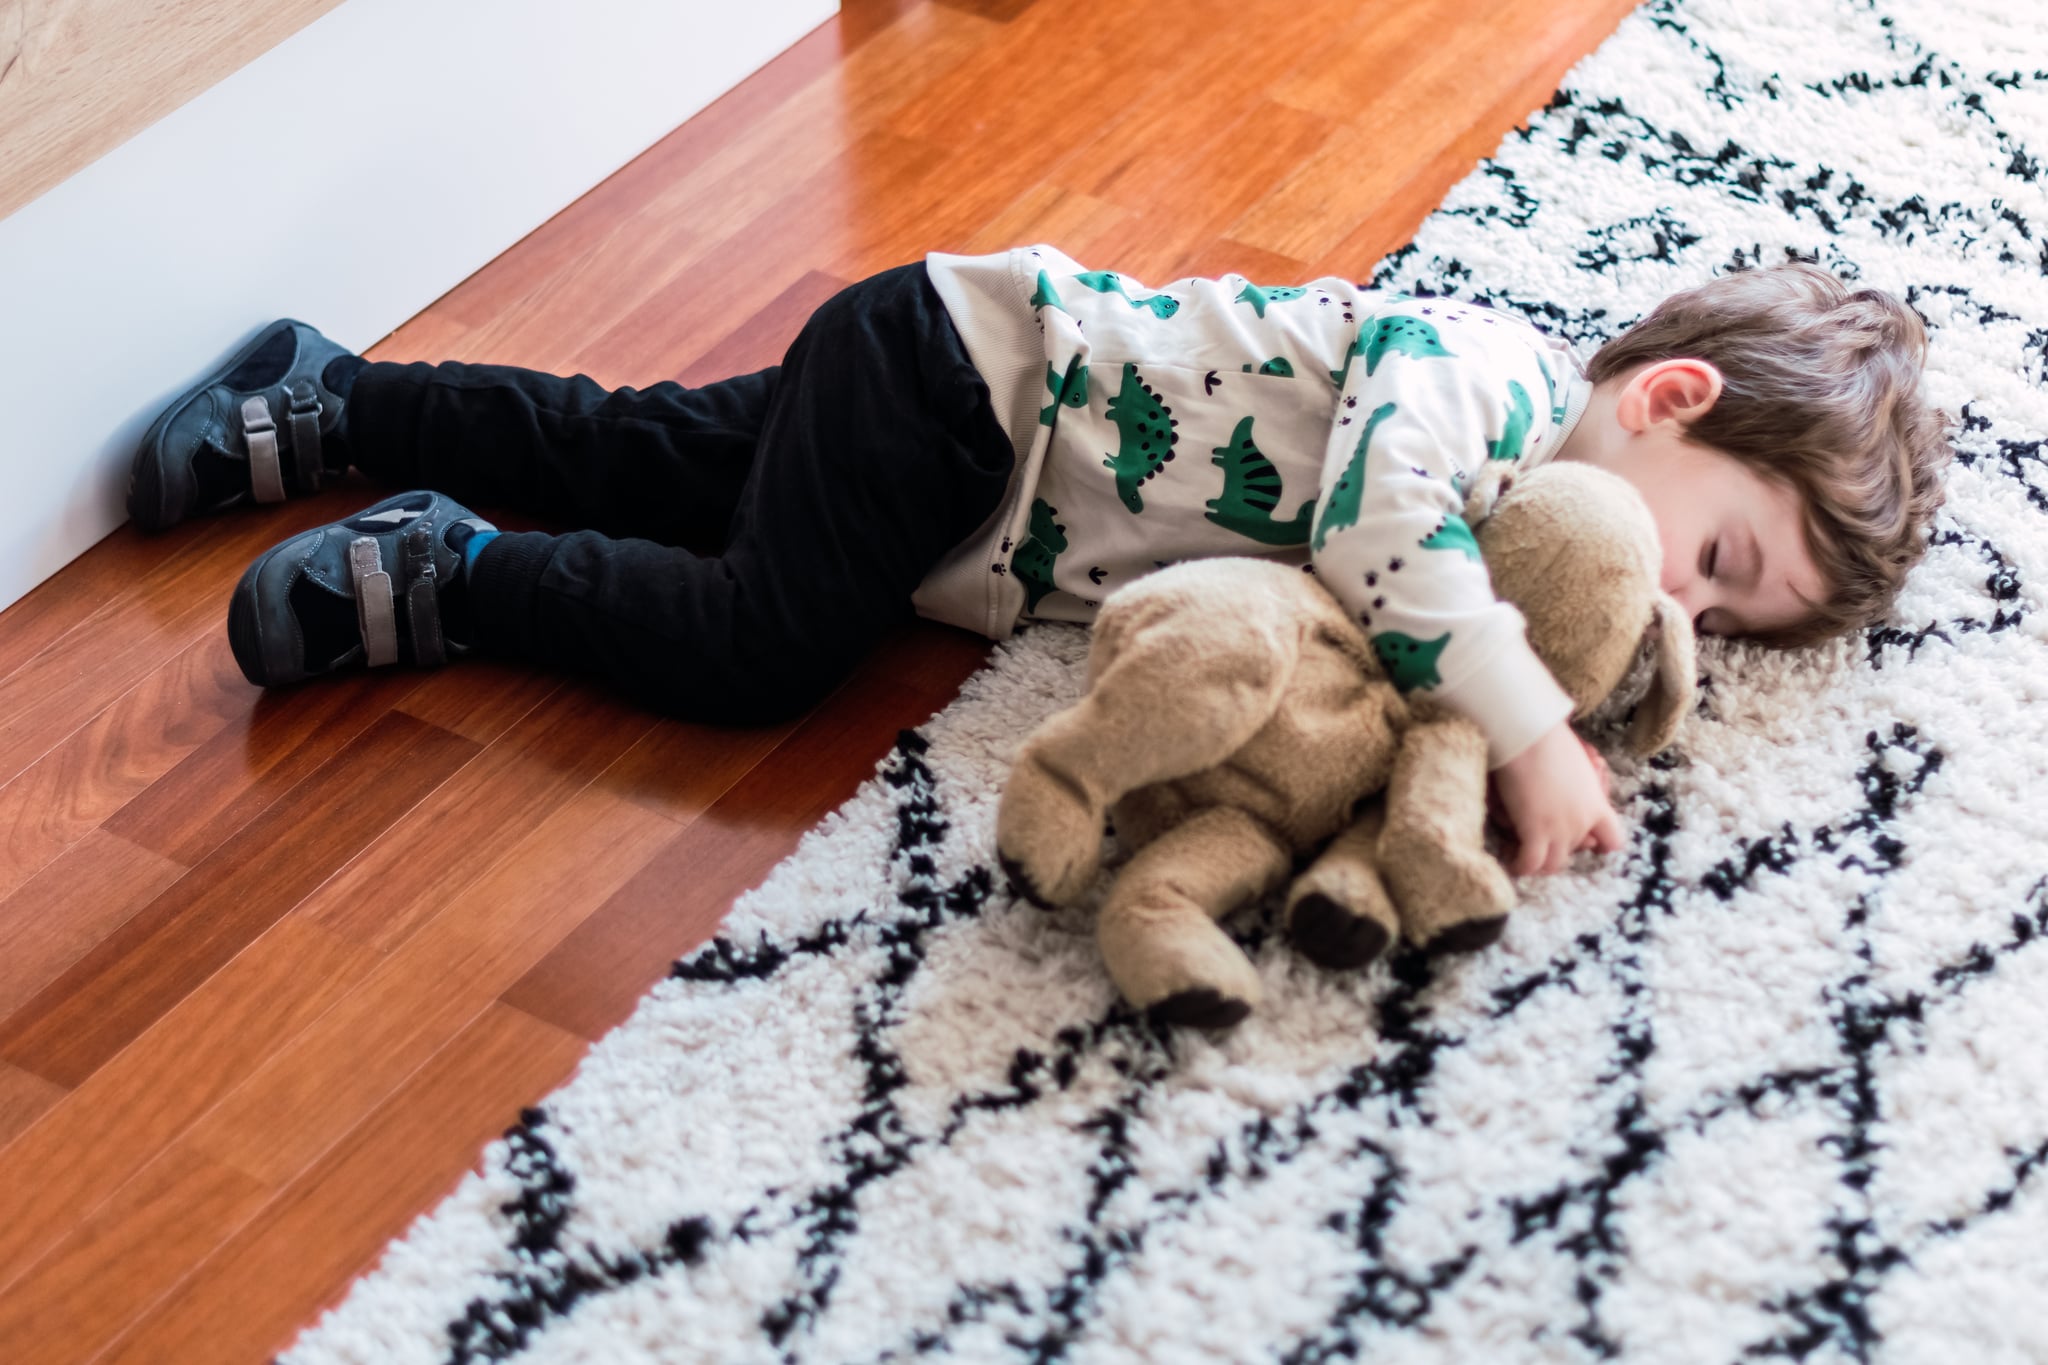 Child sleeping on the floor hugging his stuffed dog.